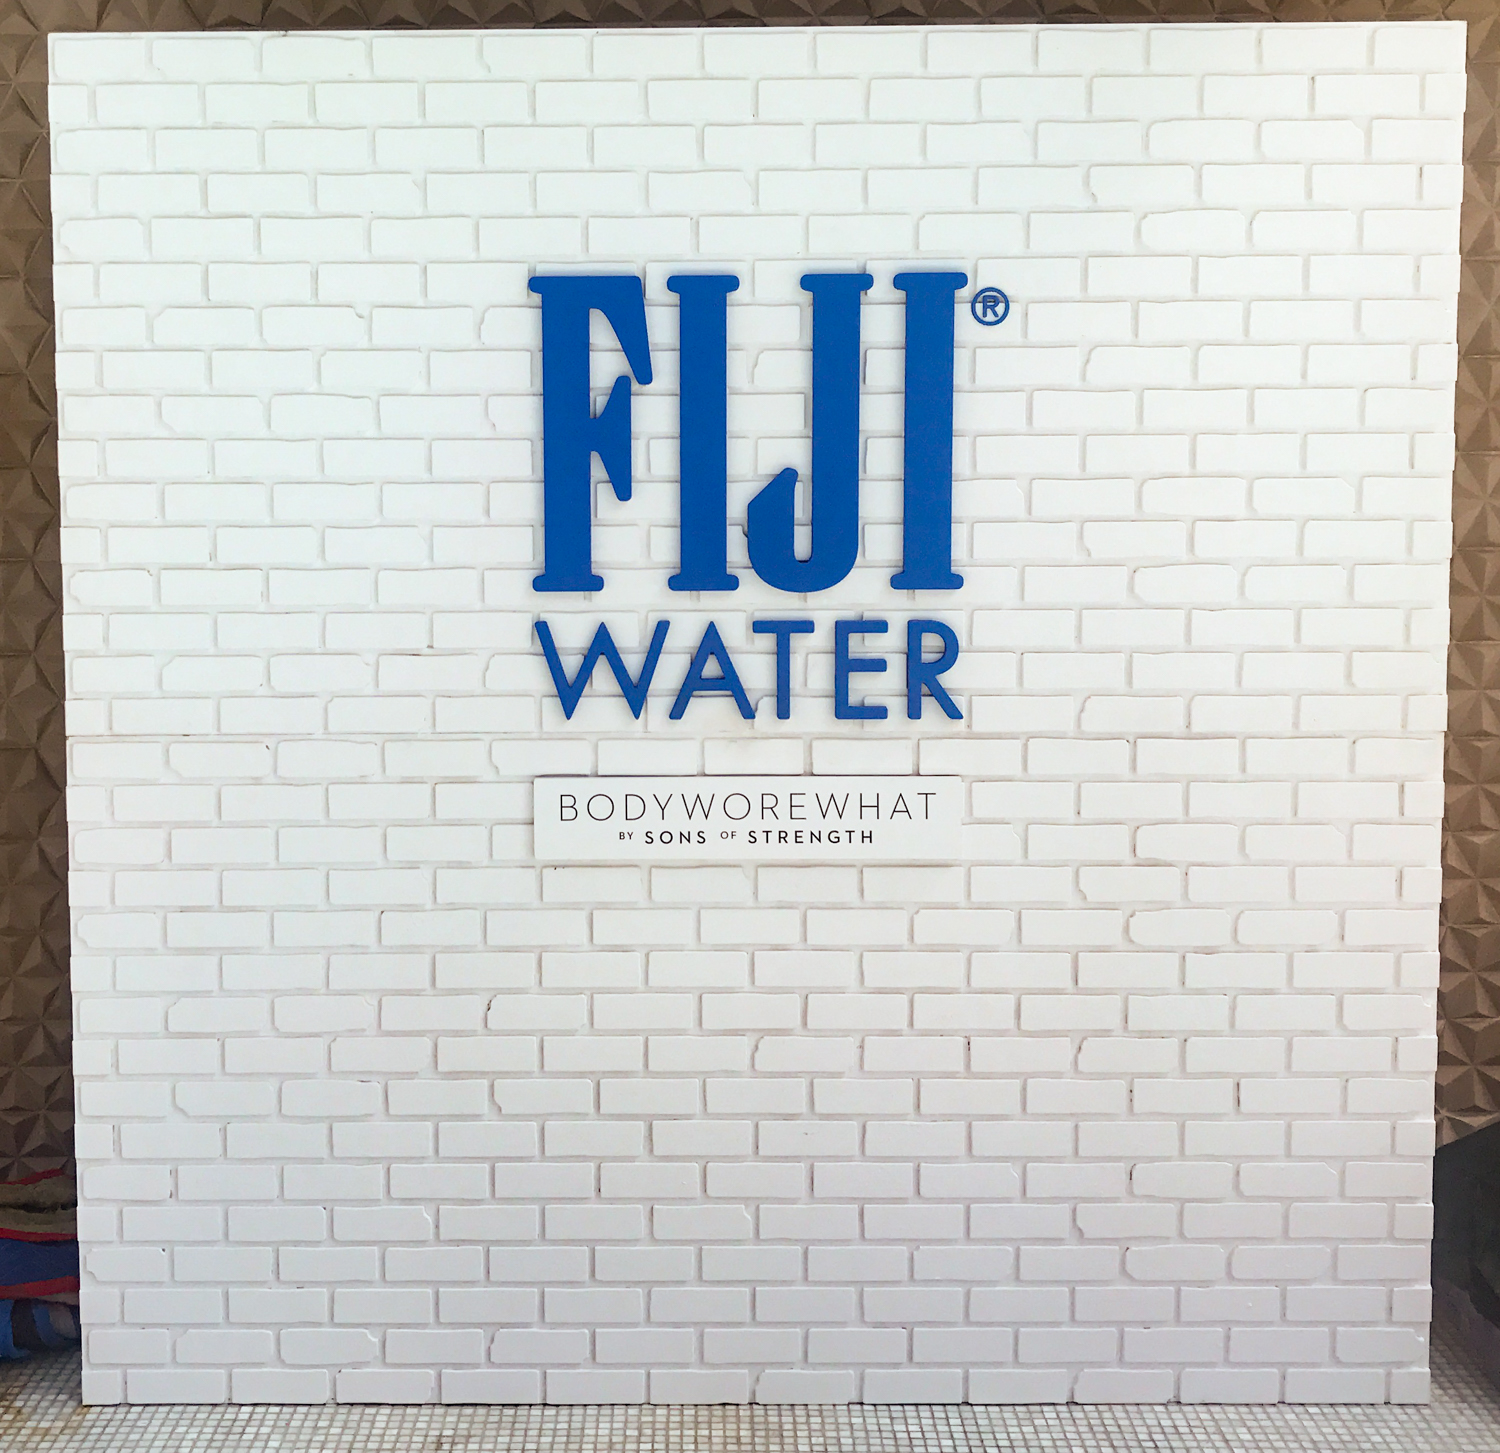 Fiji Water Fabricated by SFDS -7.jpg